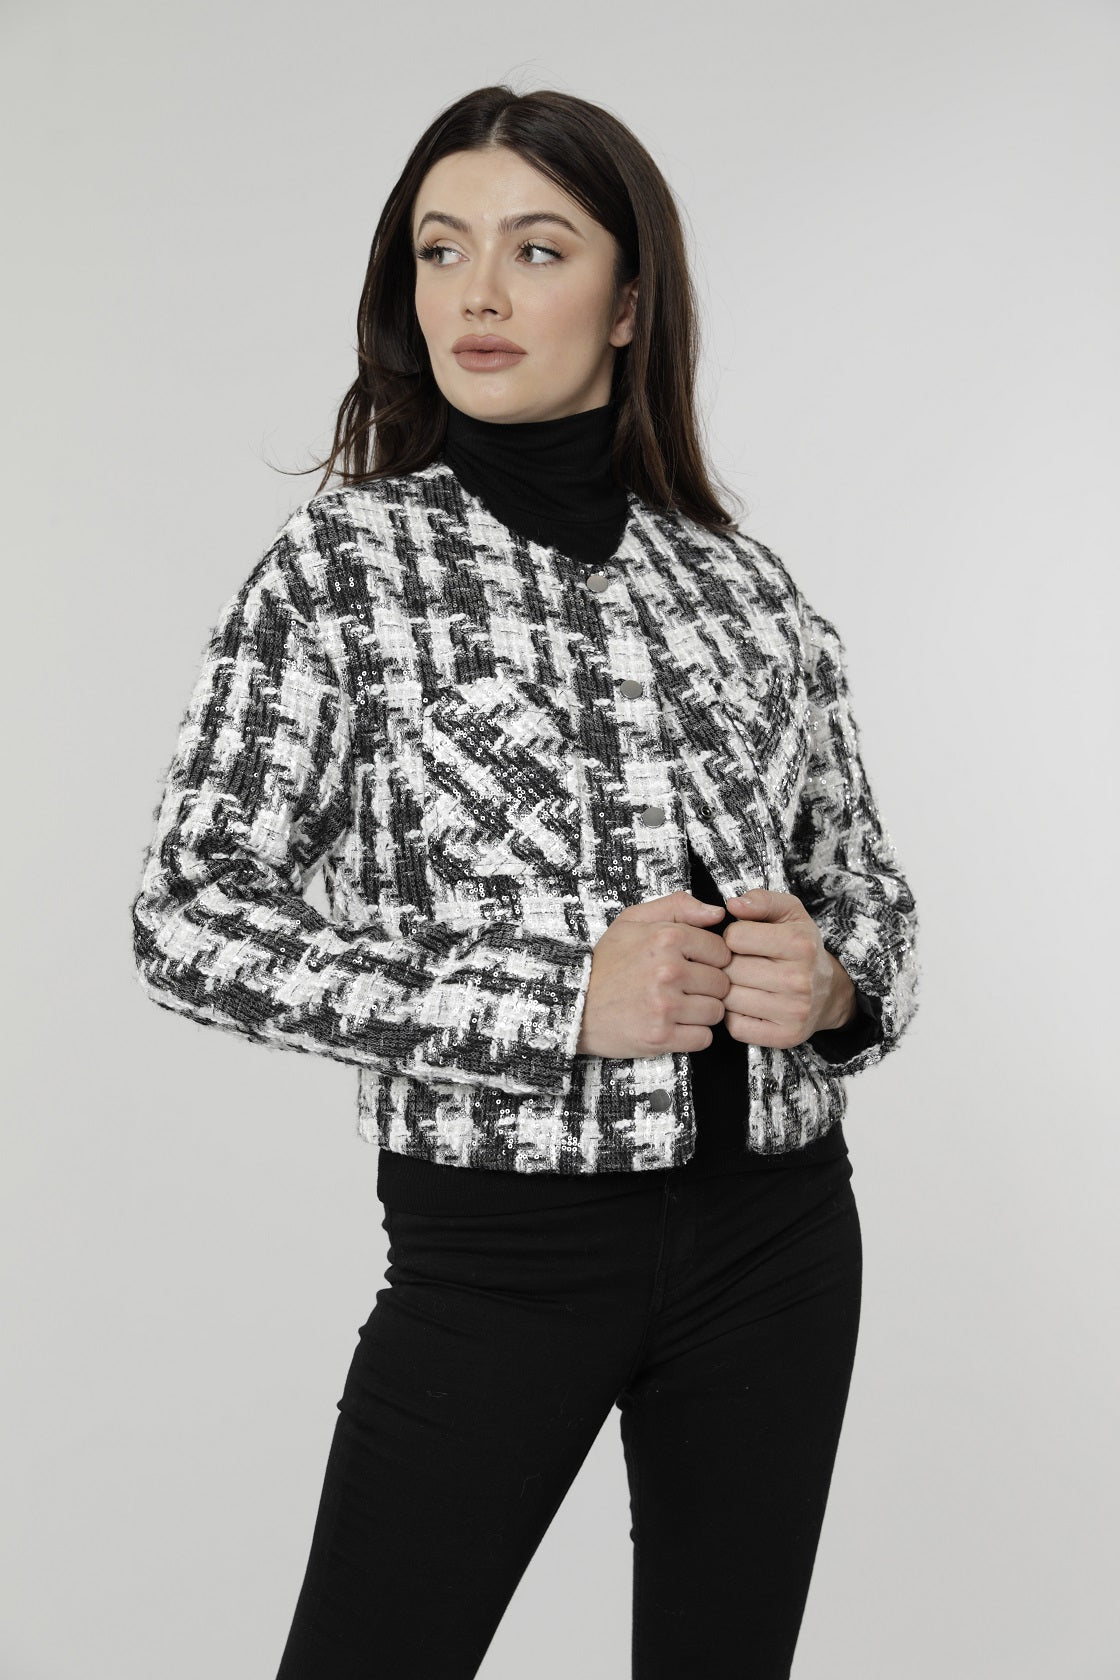 Sequin Black and White Tweed Jacket